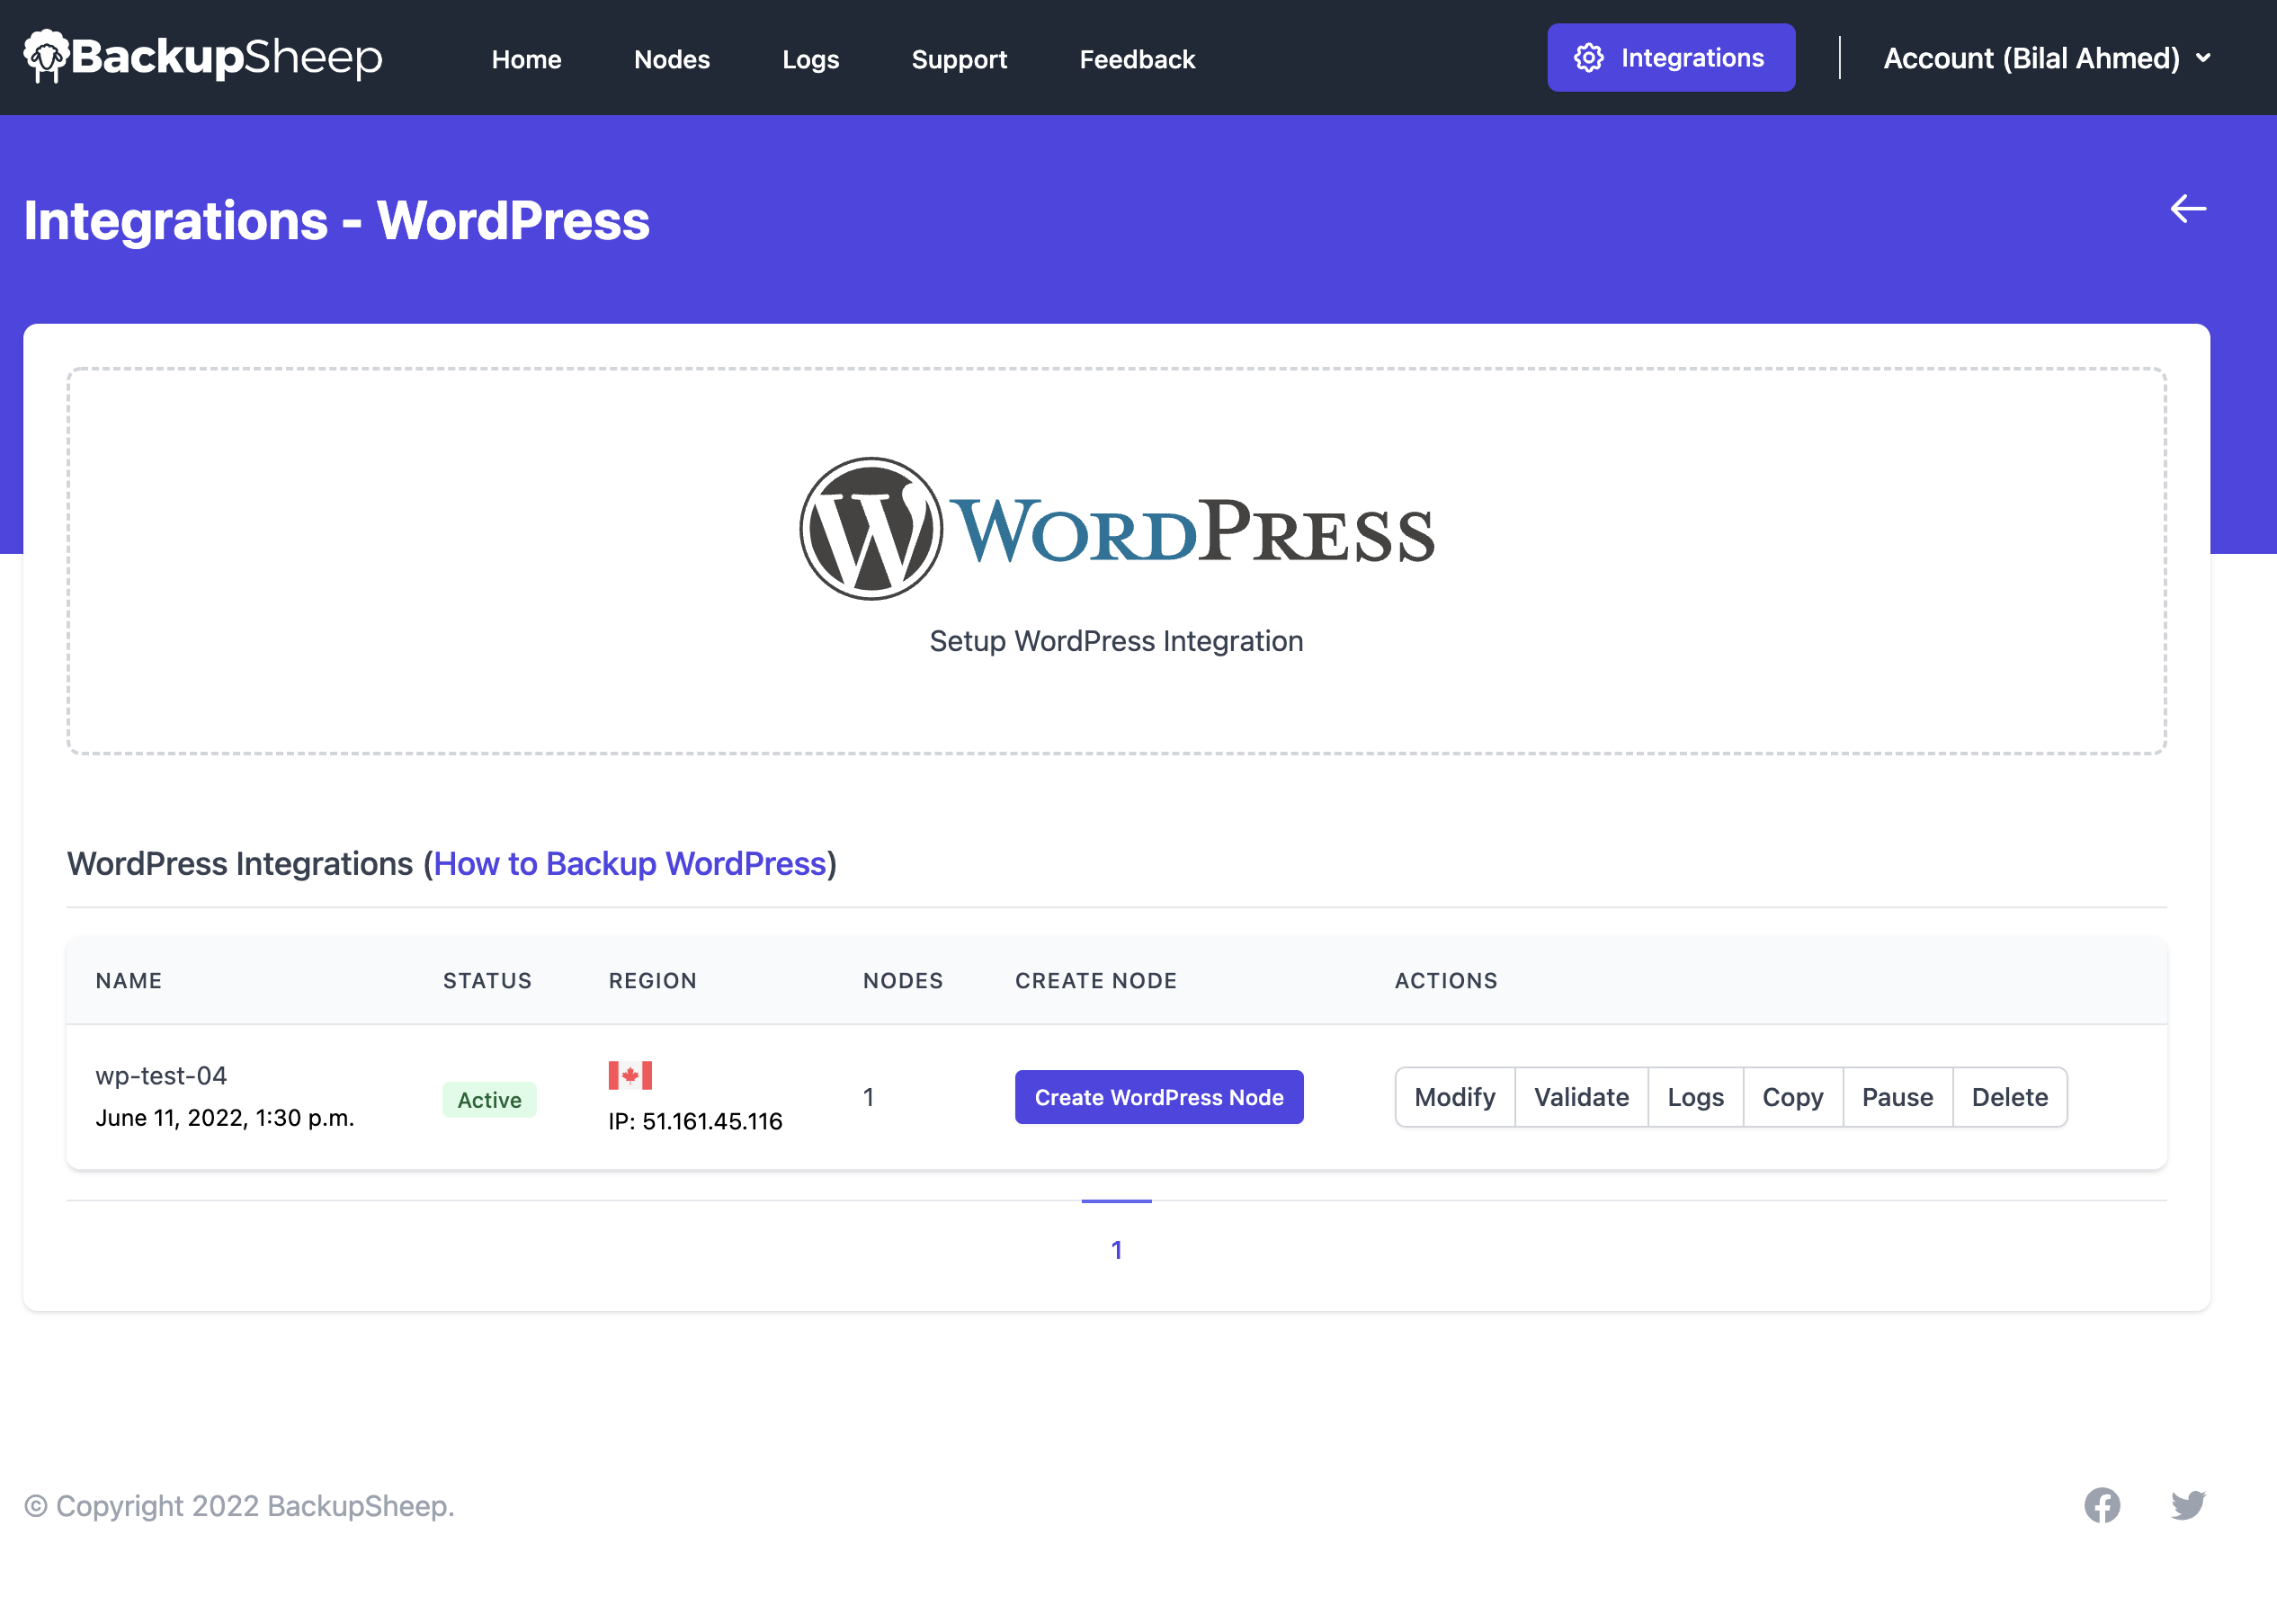 Configure WordPress Integration